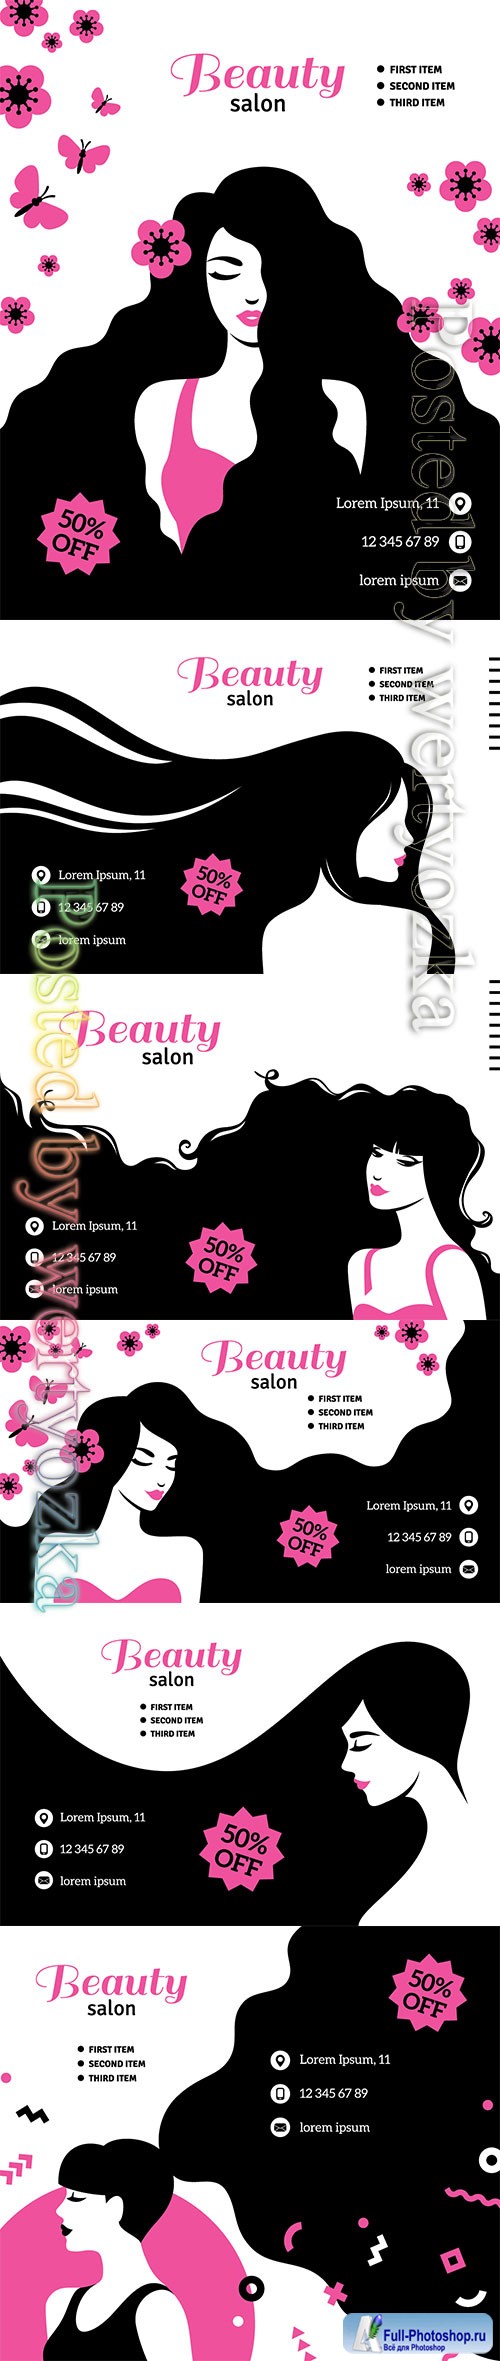 Fashion woman card template, beauty salon